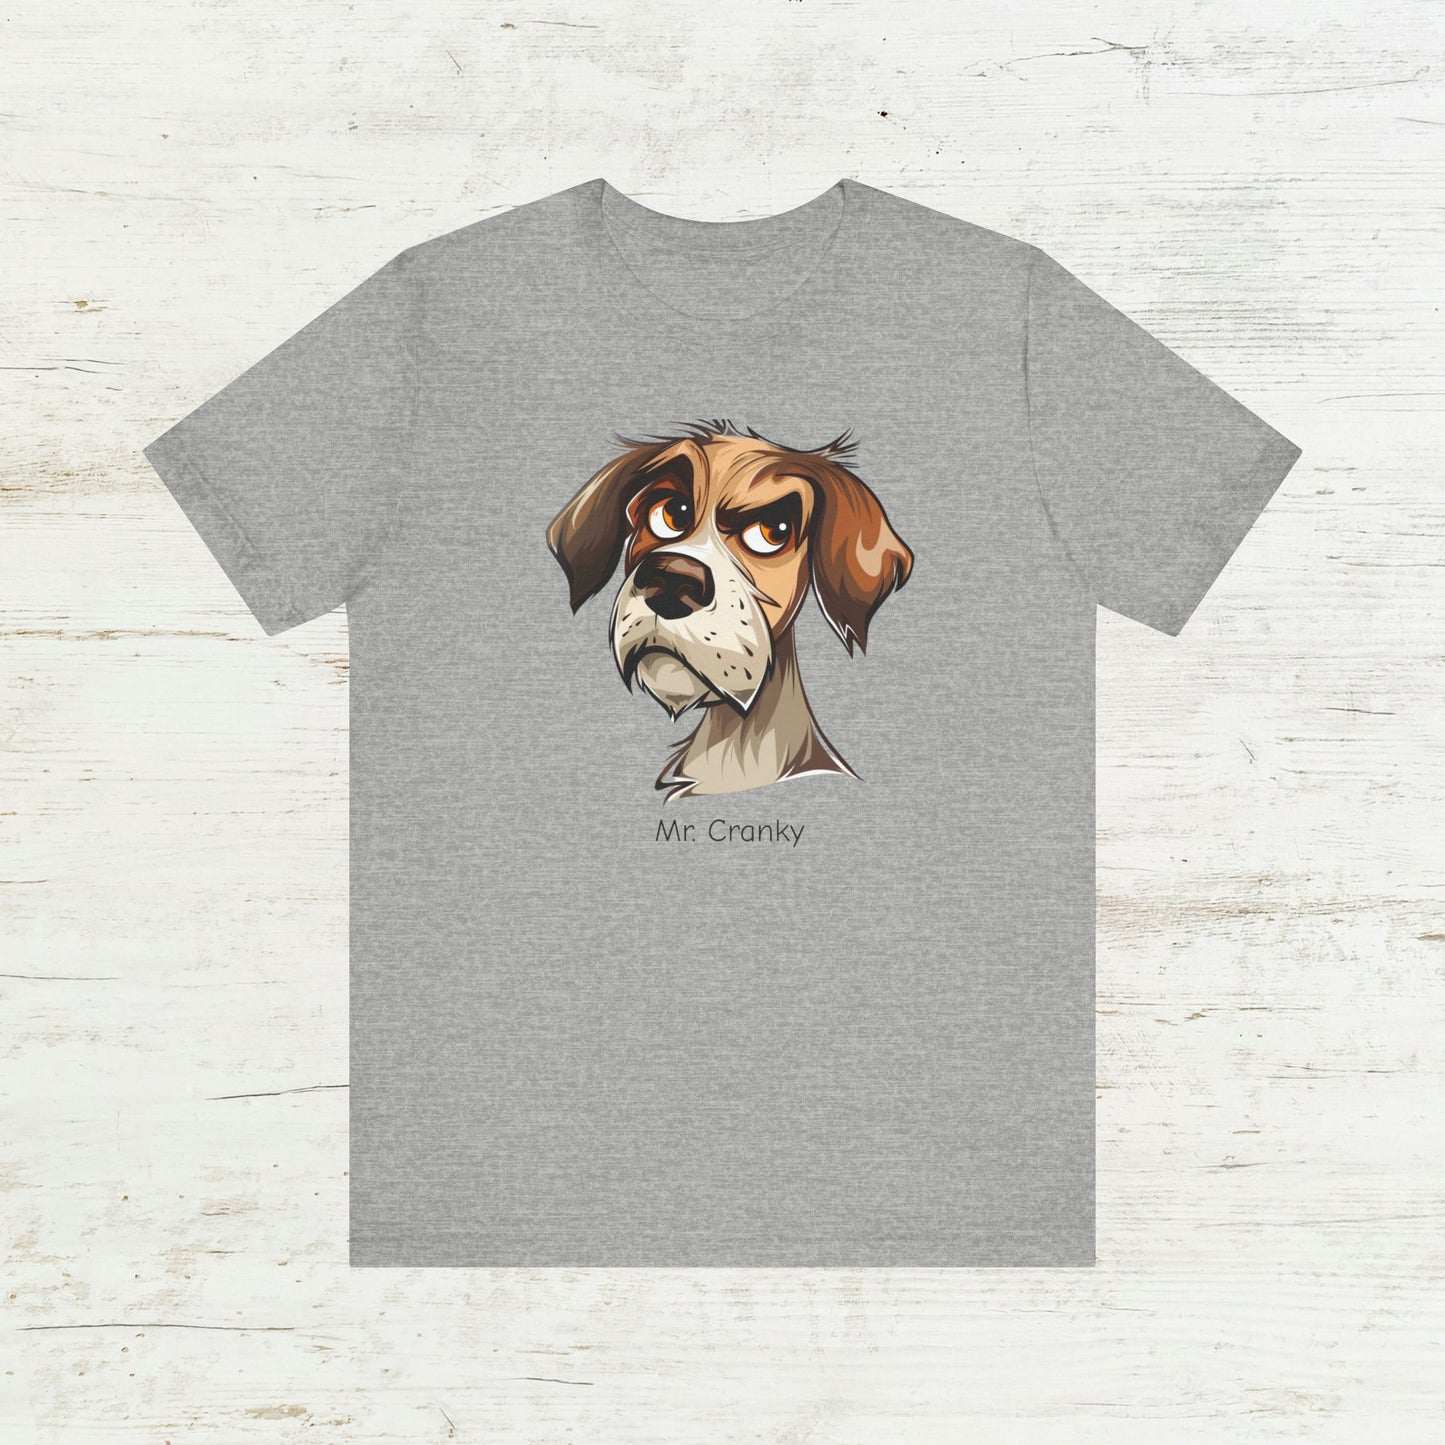 Funny Man Short Sleeve T-shirt, Cute Mr. Cranky Comment & Dog TShirt - FlooredByArt